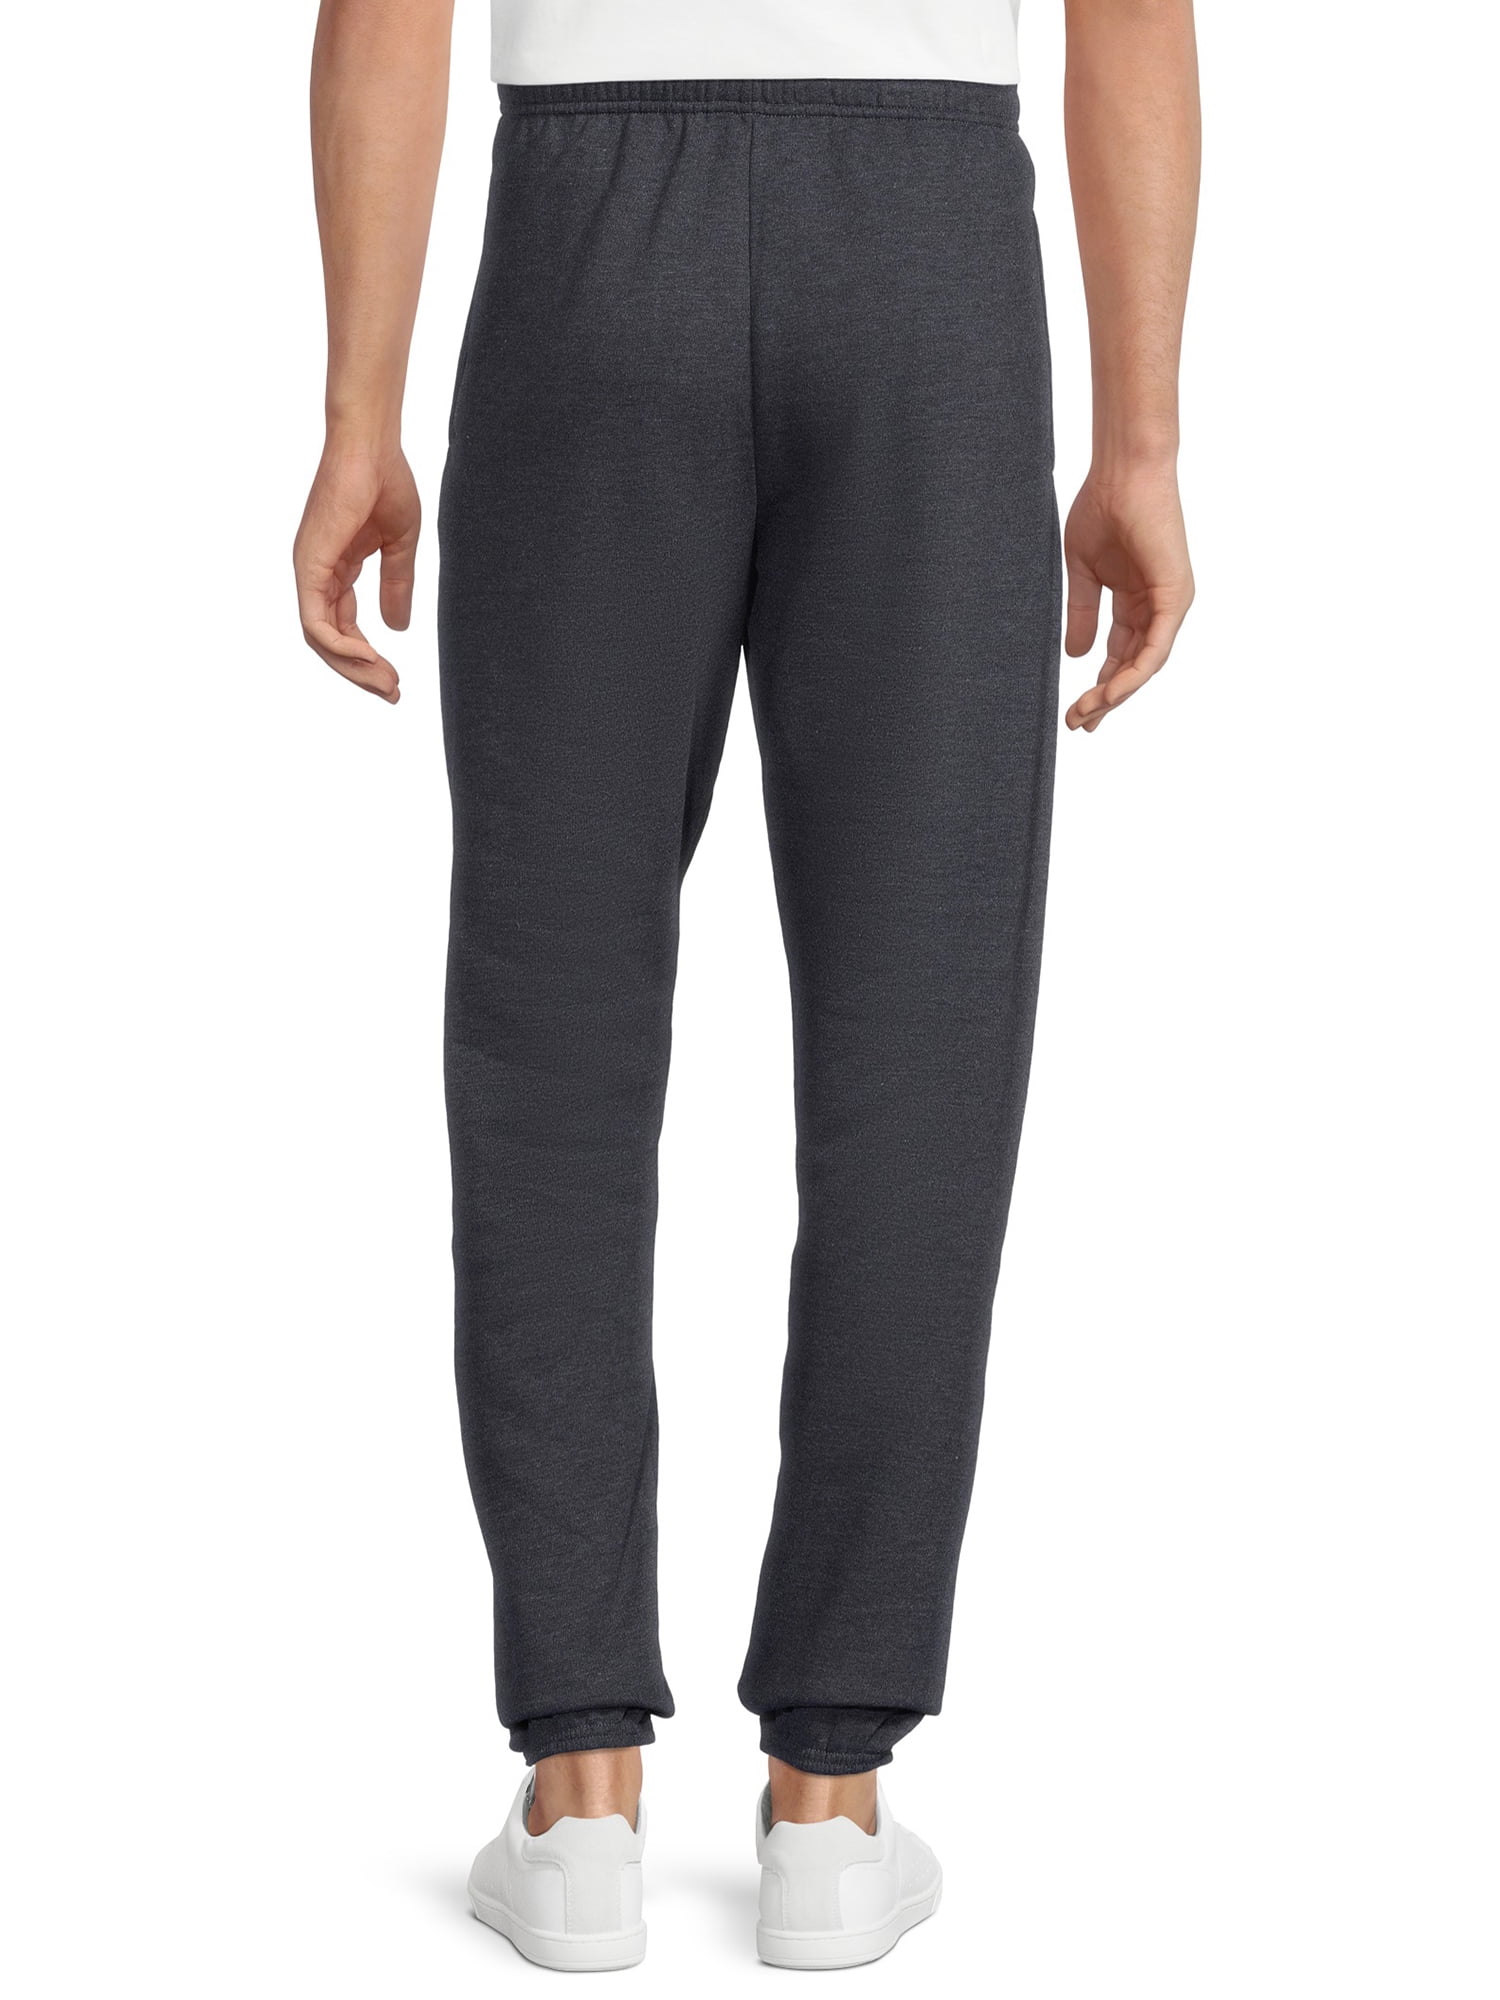 Athletic Works Men's Fleece Elastic Bottom Sweatpants, Sizes S-4XL 